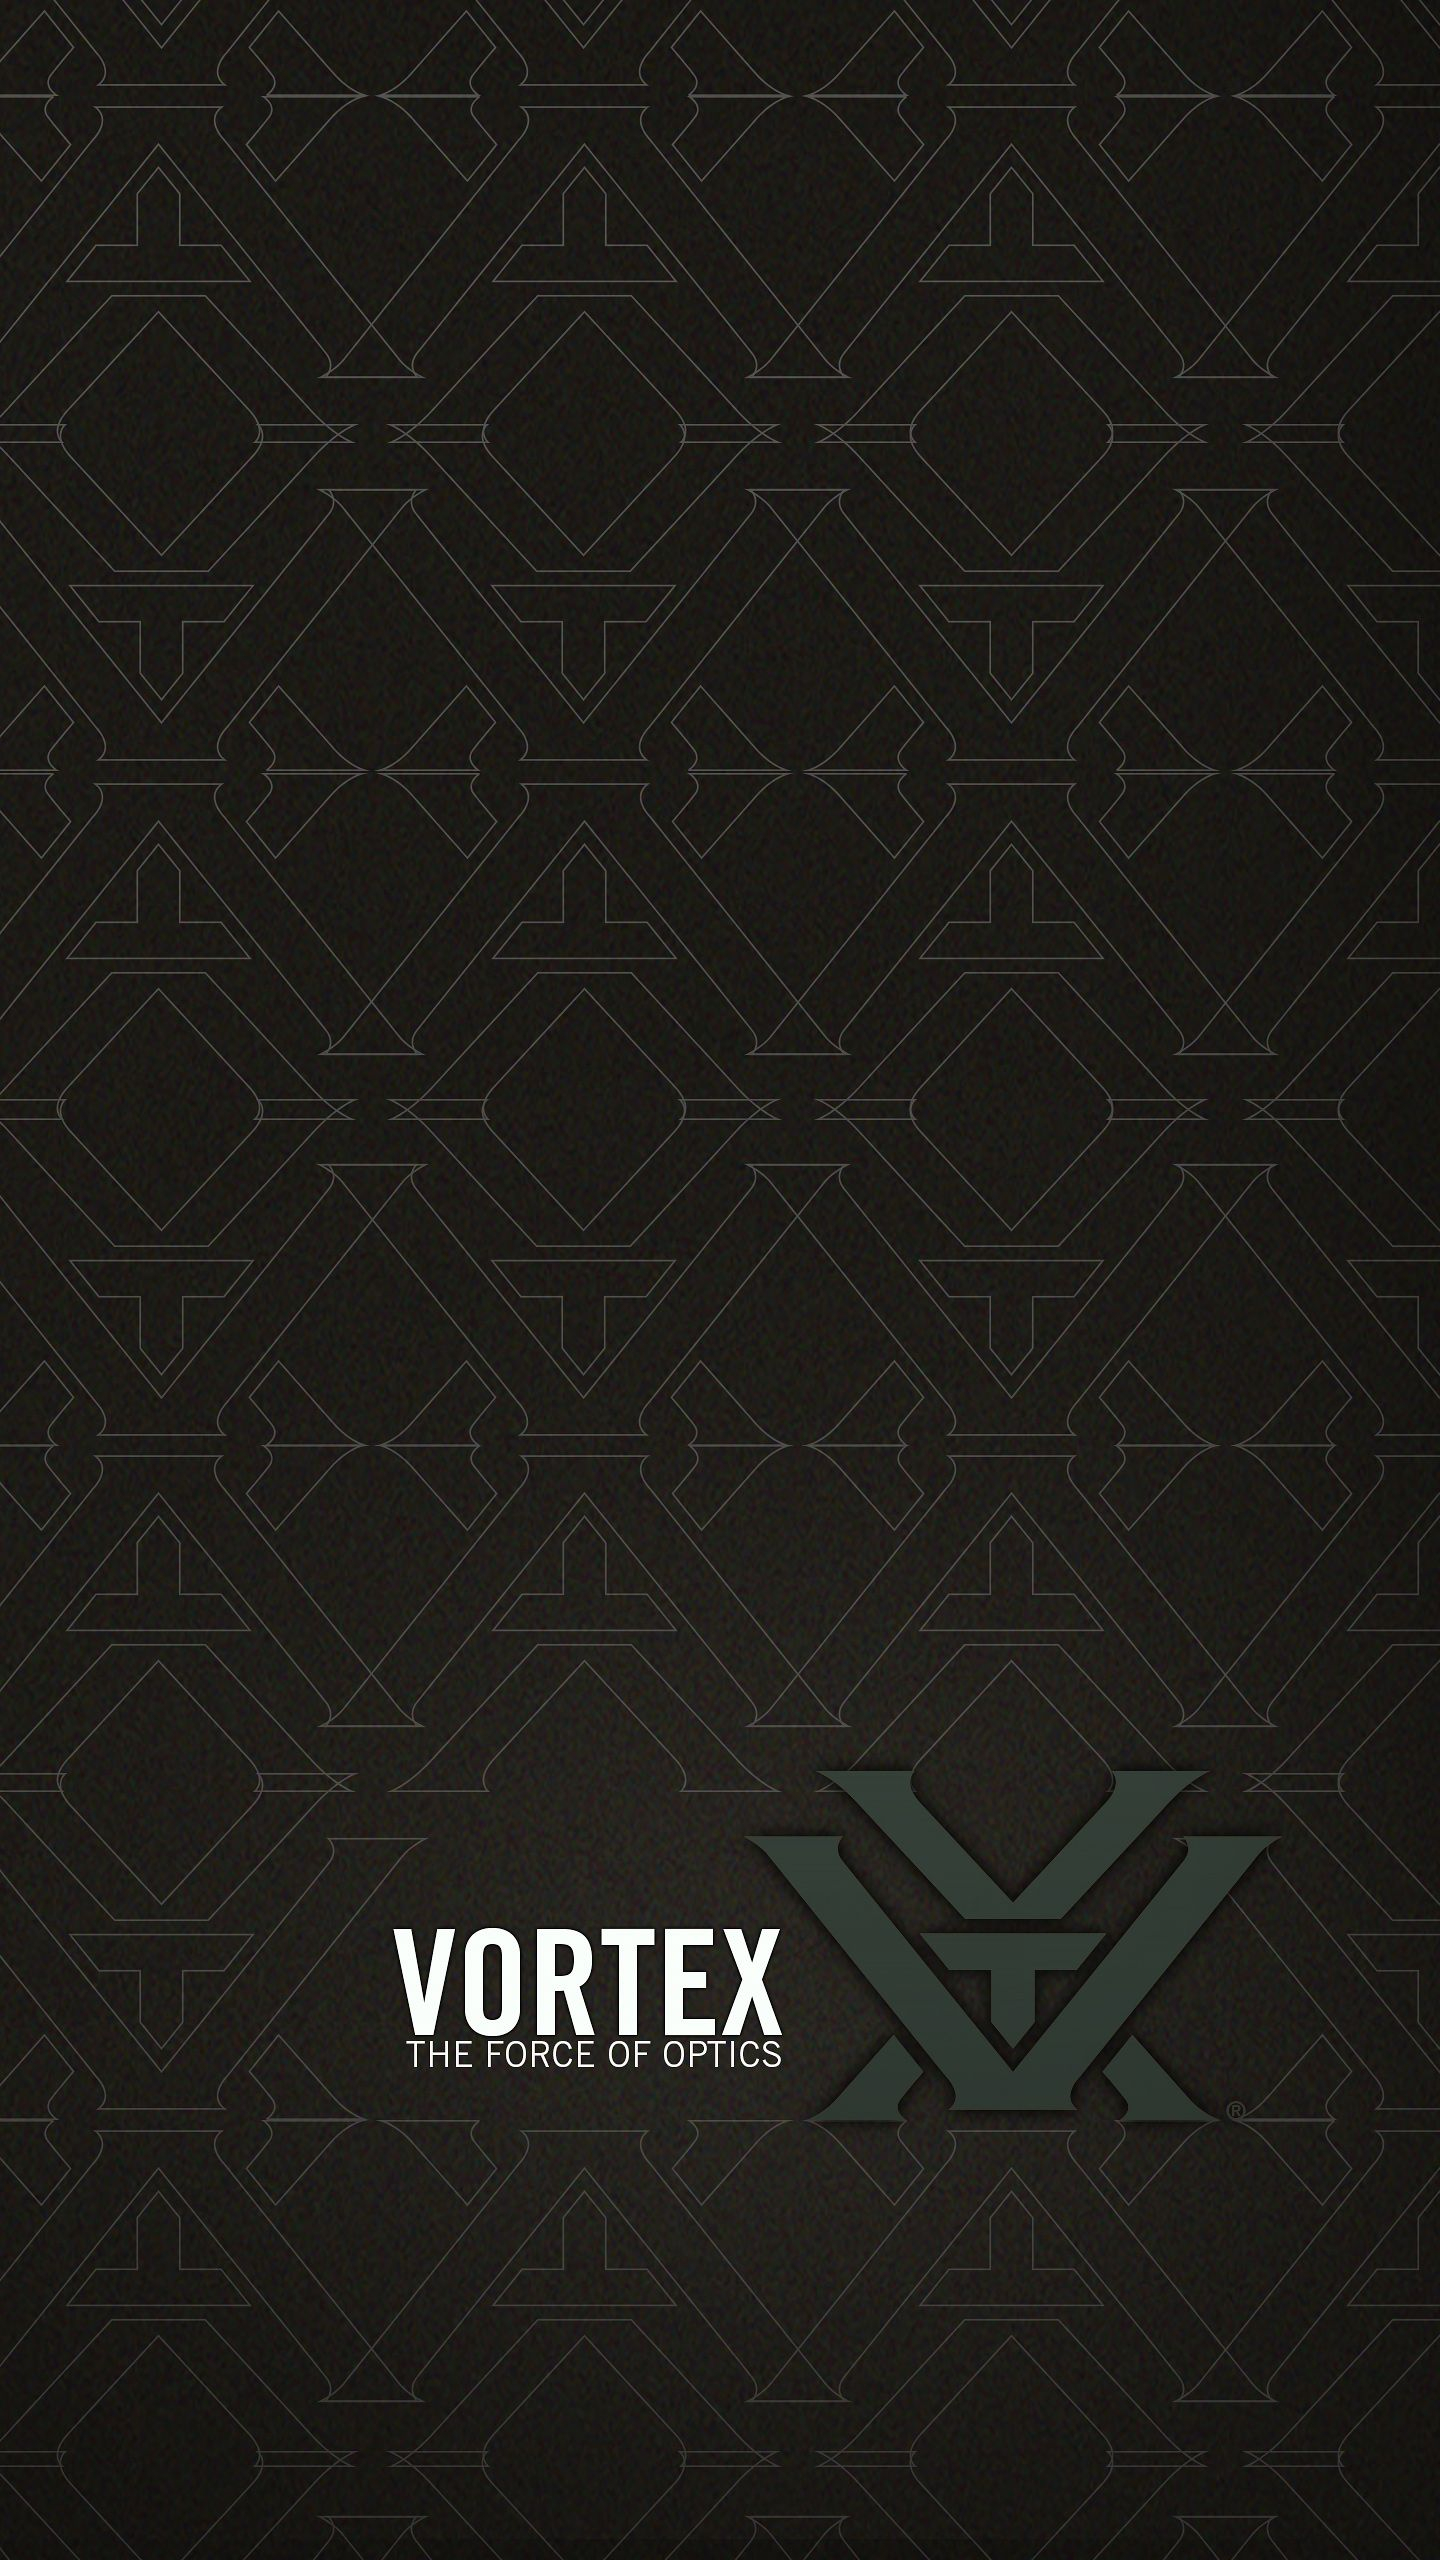 Vortex optics wallpapers and backgrounds k hd dual screen